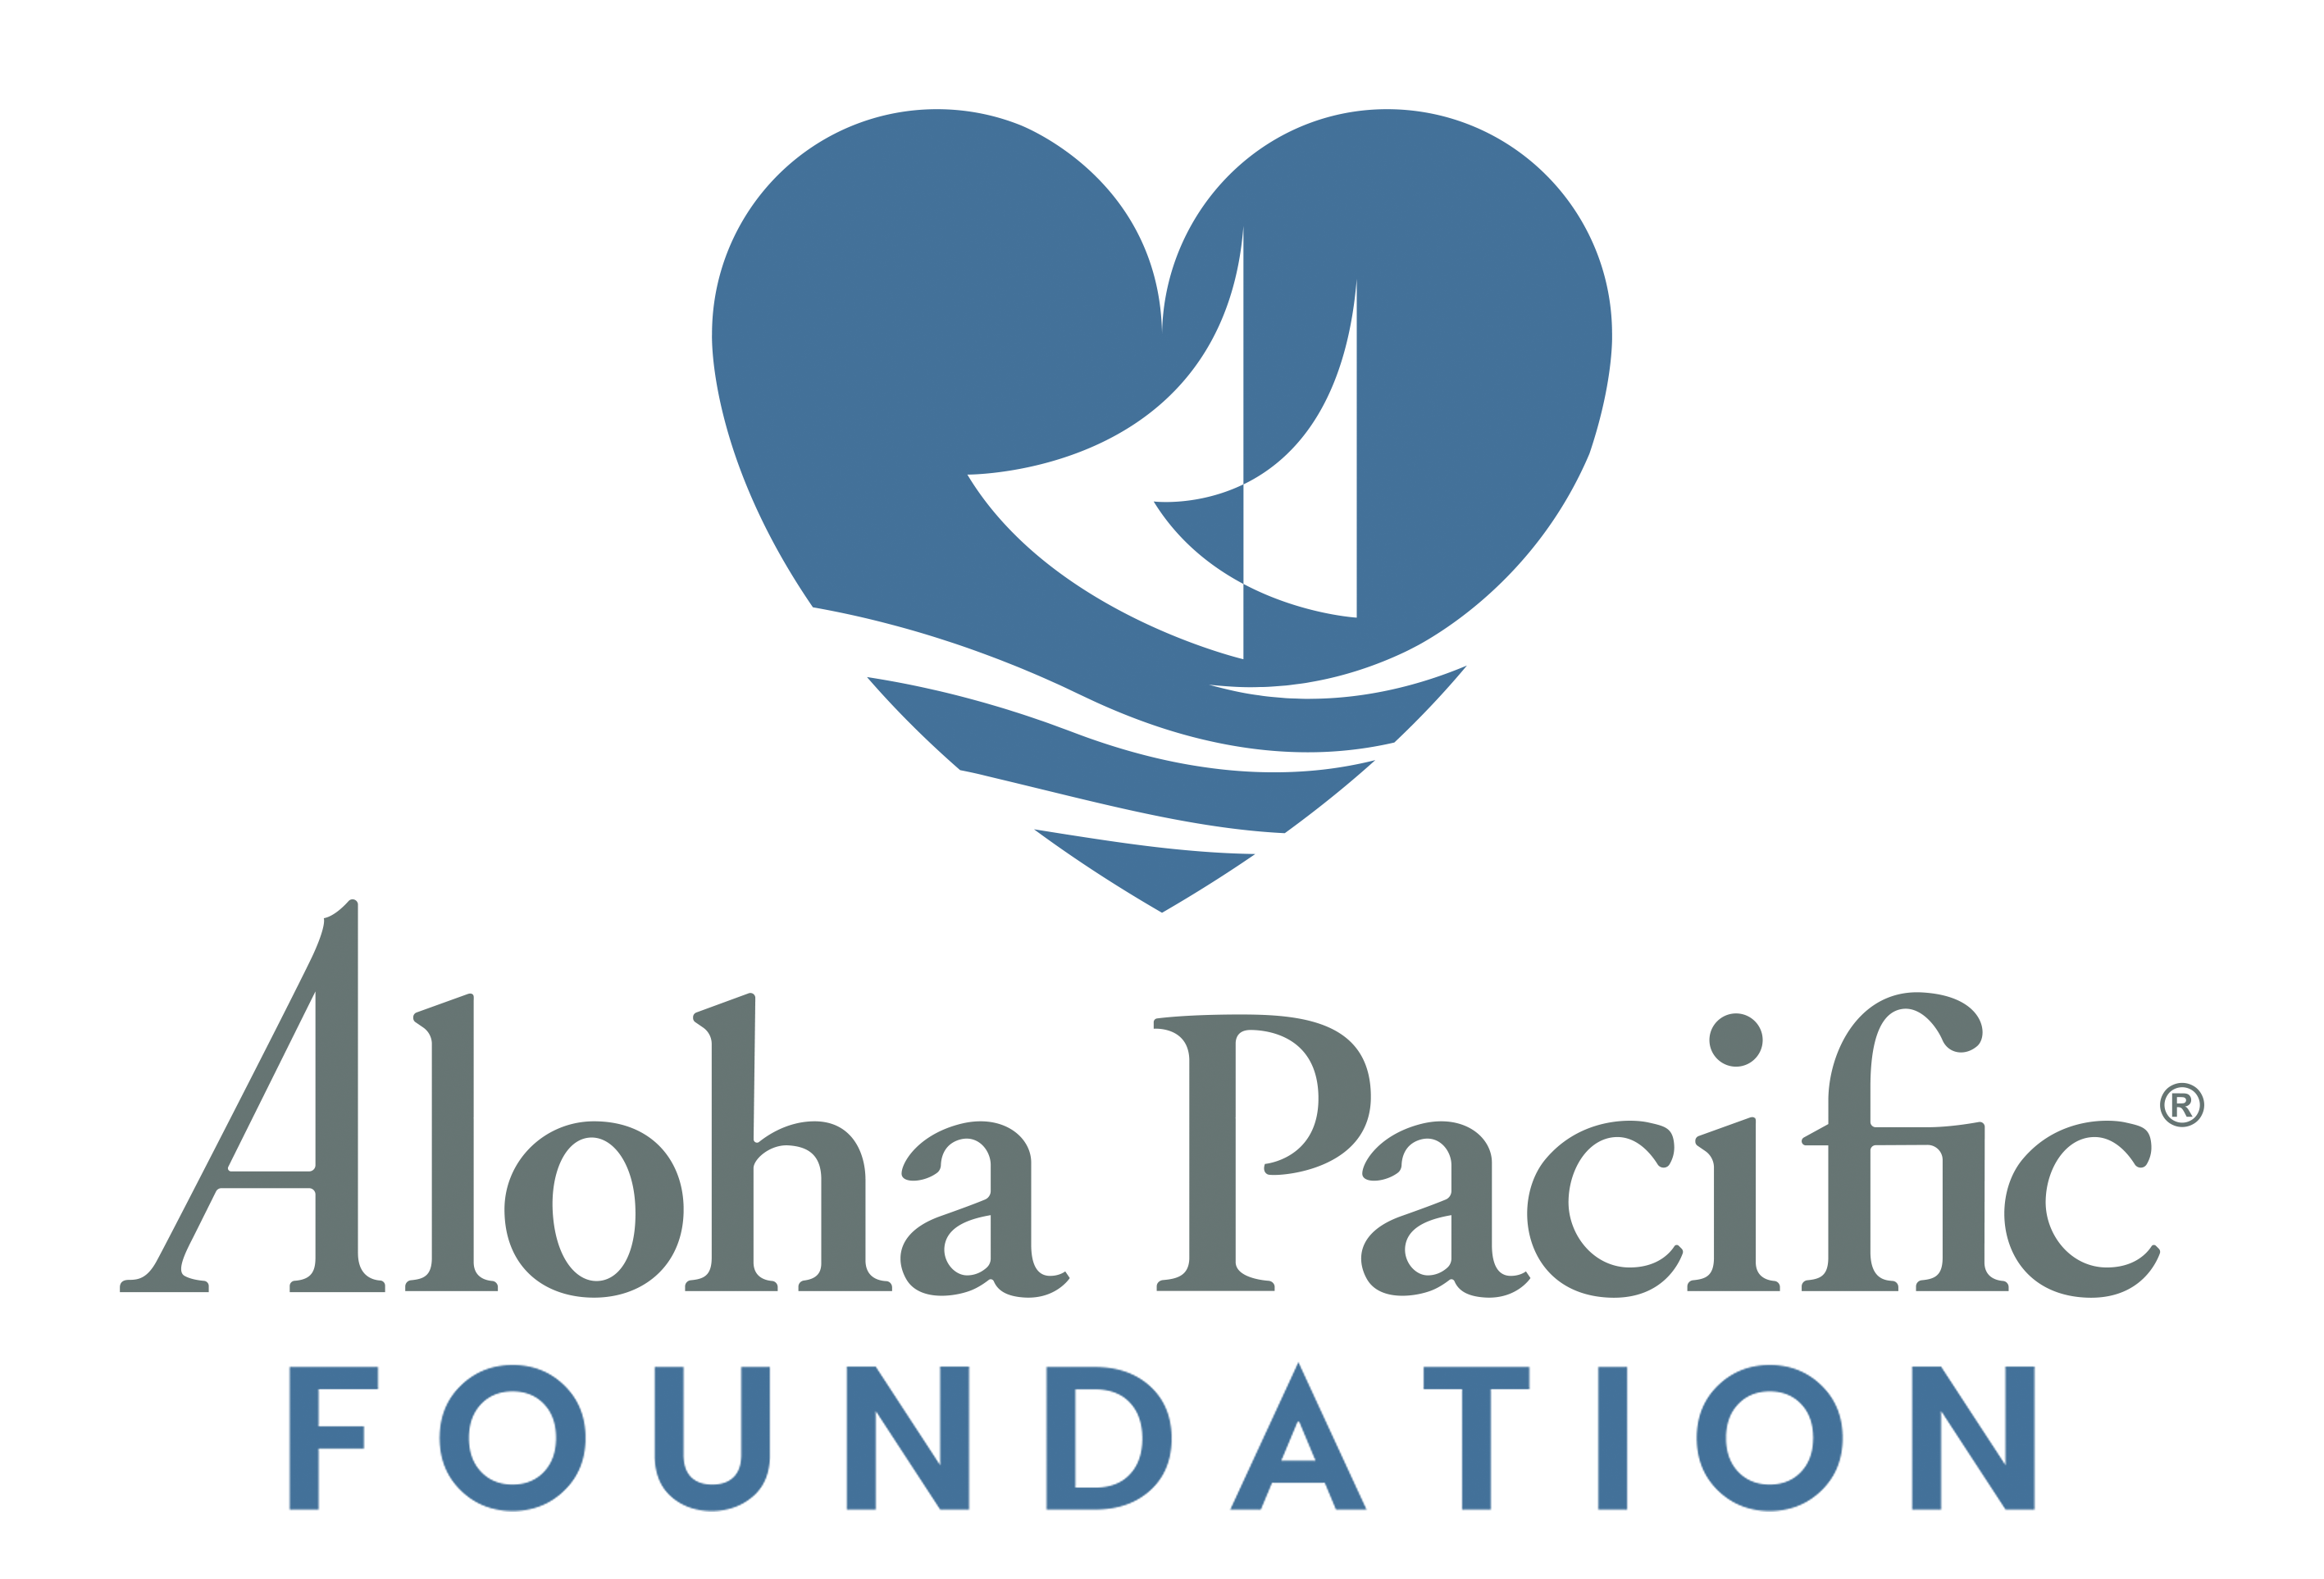 Aloha Pacific Foundation logo